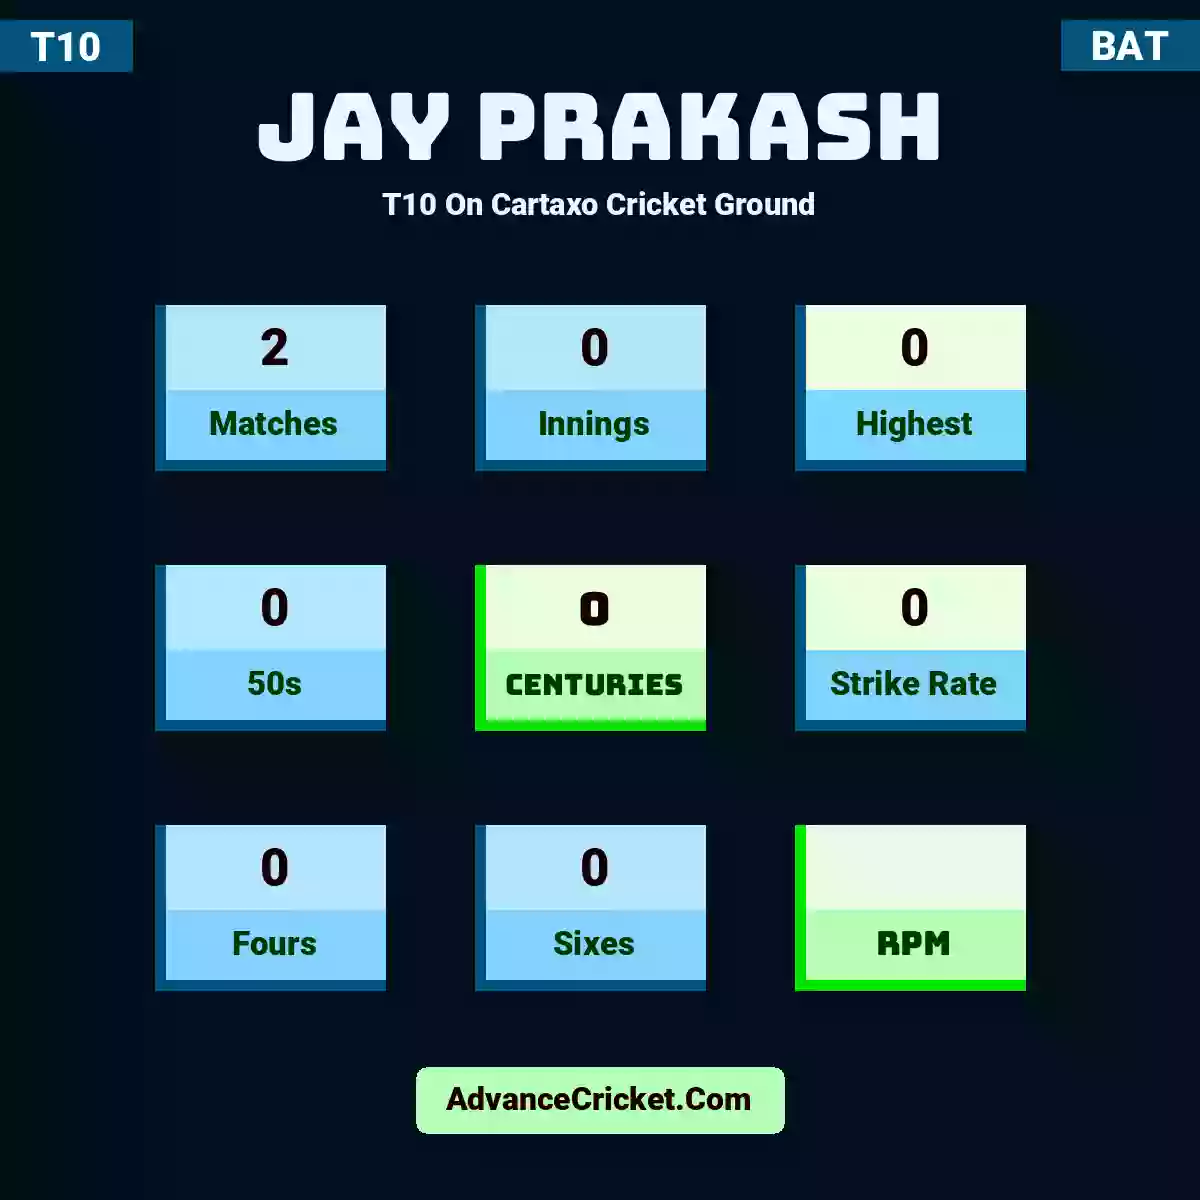 Jay Prakash T10  On Cartaxo Cricket Ground, Jay Prakash played 2 matches, scored 0 runs as highest, 0 half-centuries, and 0 centuries, with a strike rate of 0. J.Prakash hit 0 fours and 0 sixes.